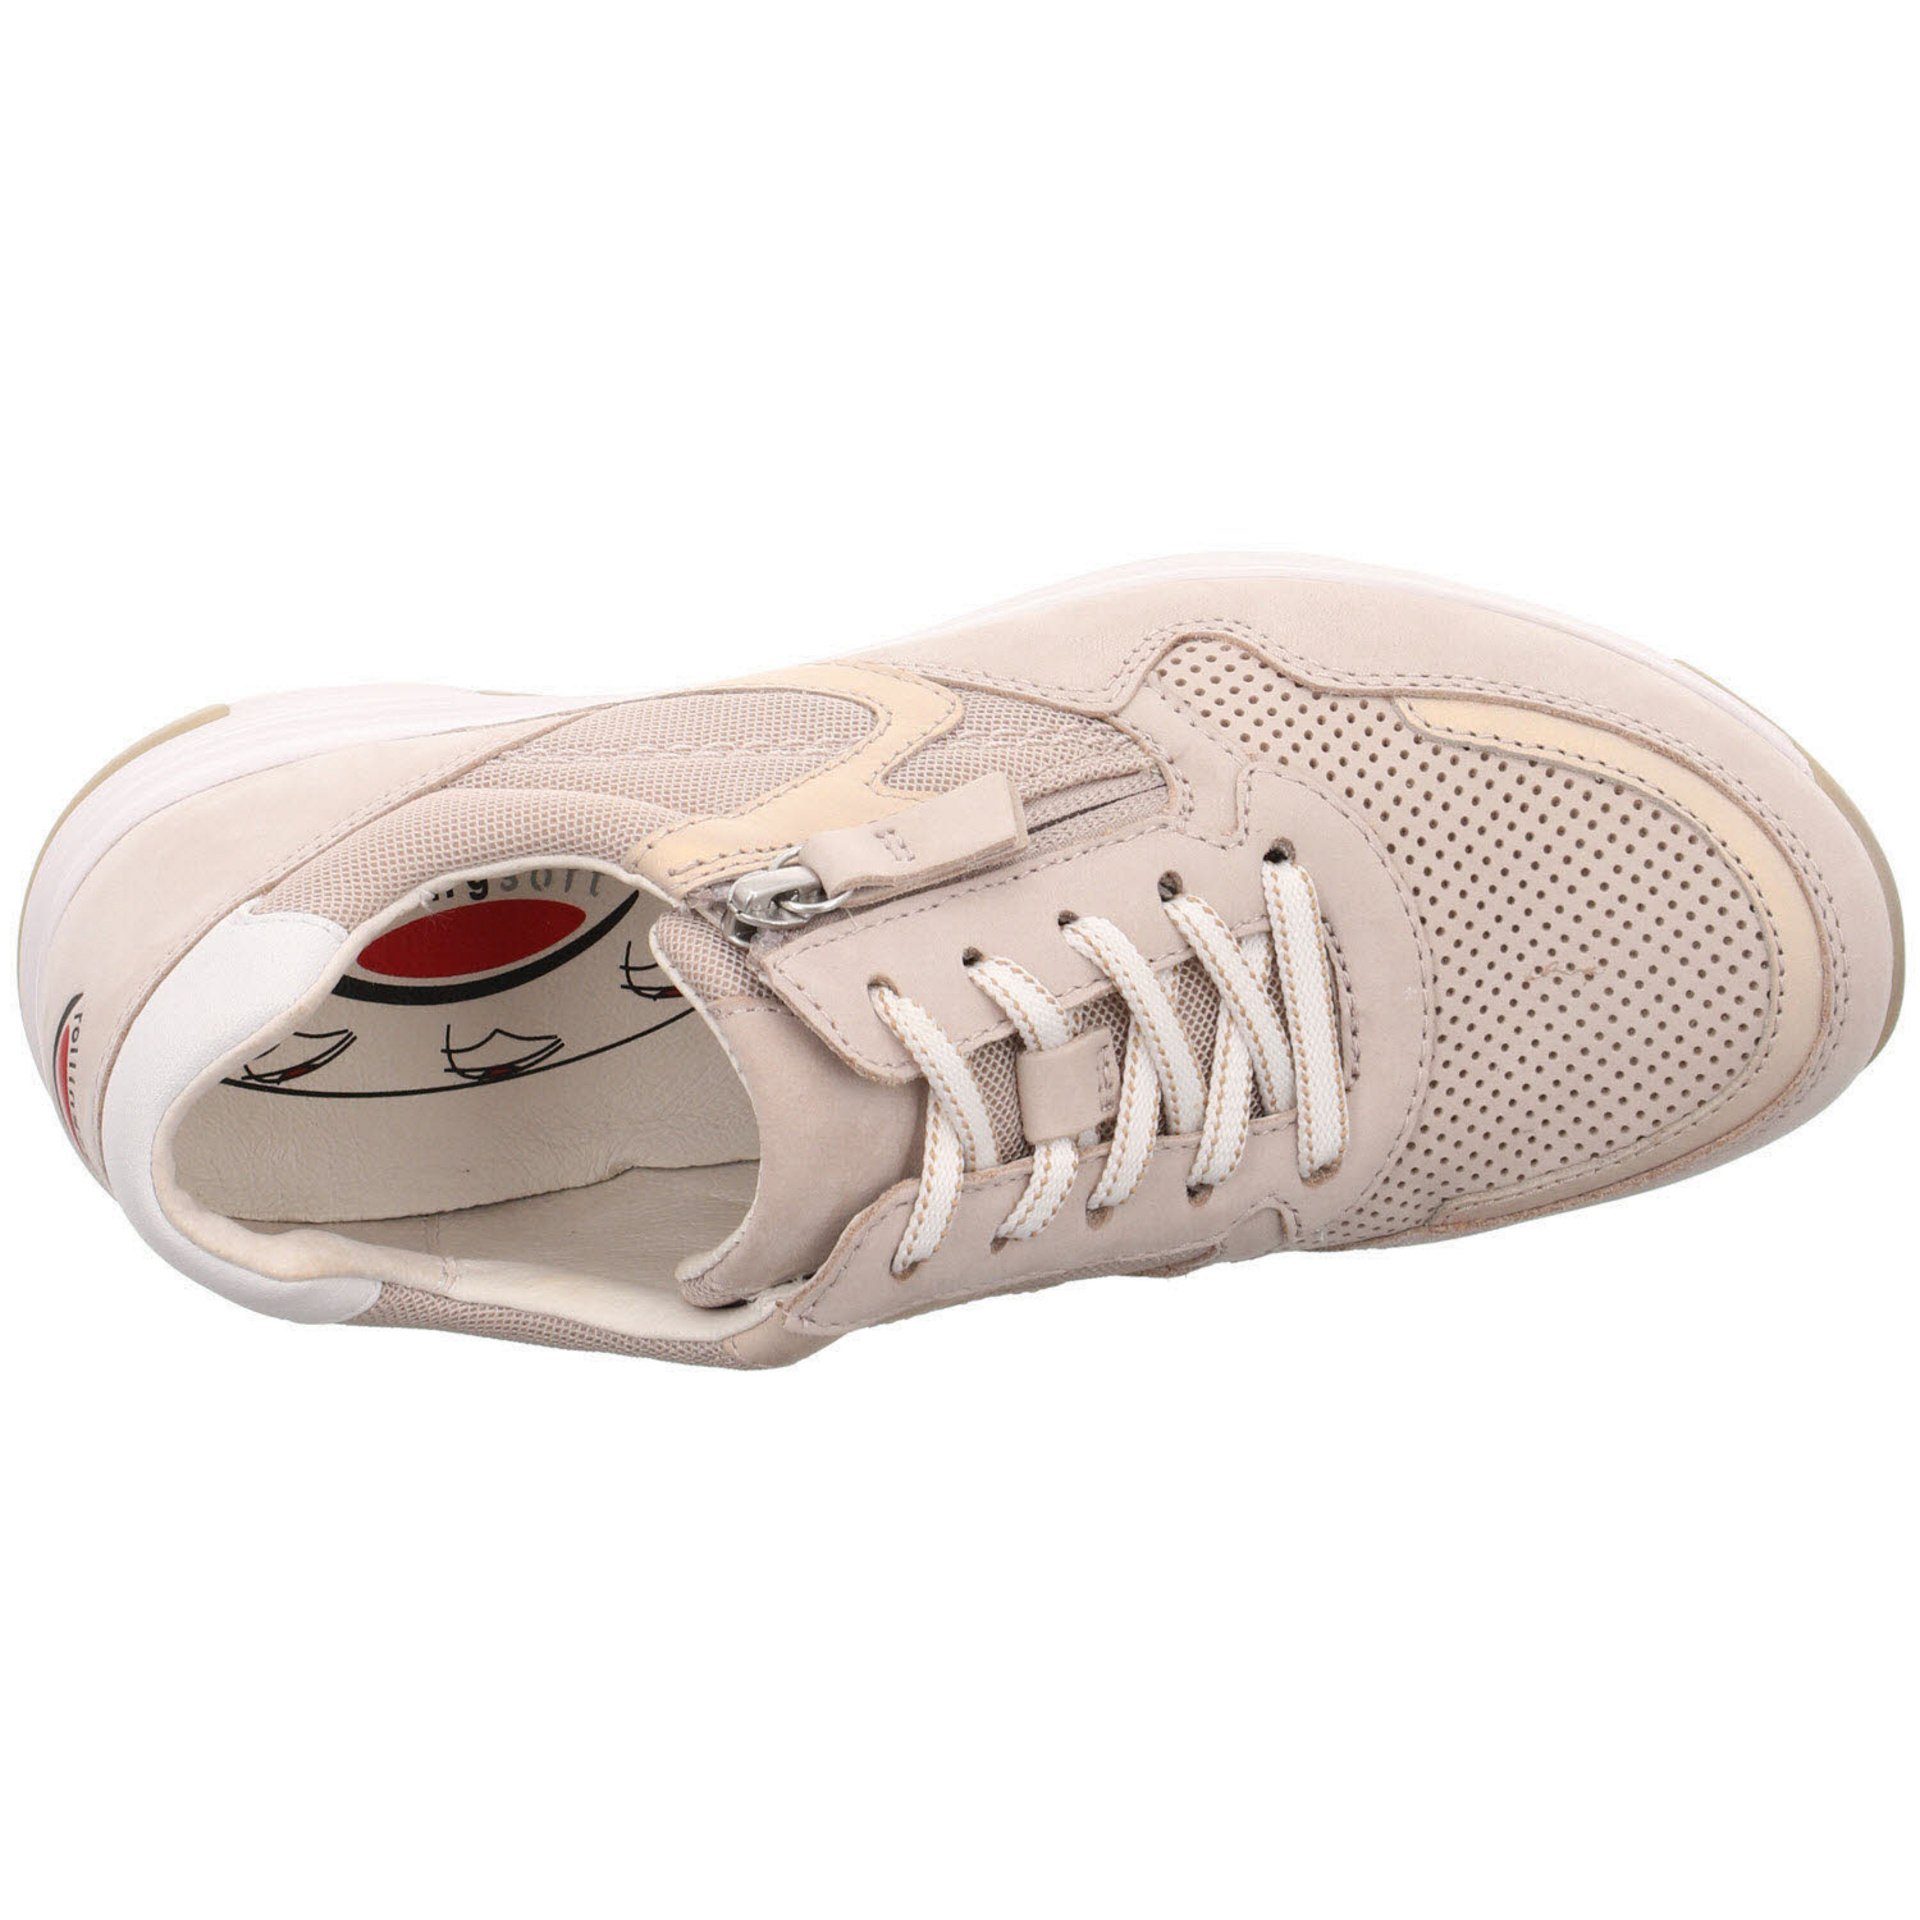 31) Gabor Sneaker Beige Rollingsoft Sneaker Schuhe Damen / Leder-/Textilkombination (puder/weiss Schnürschuh